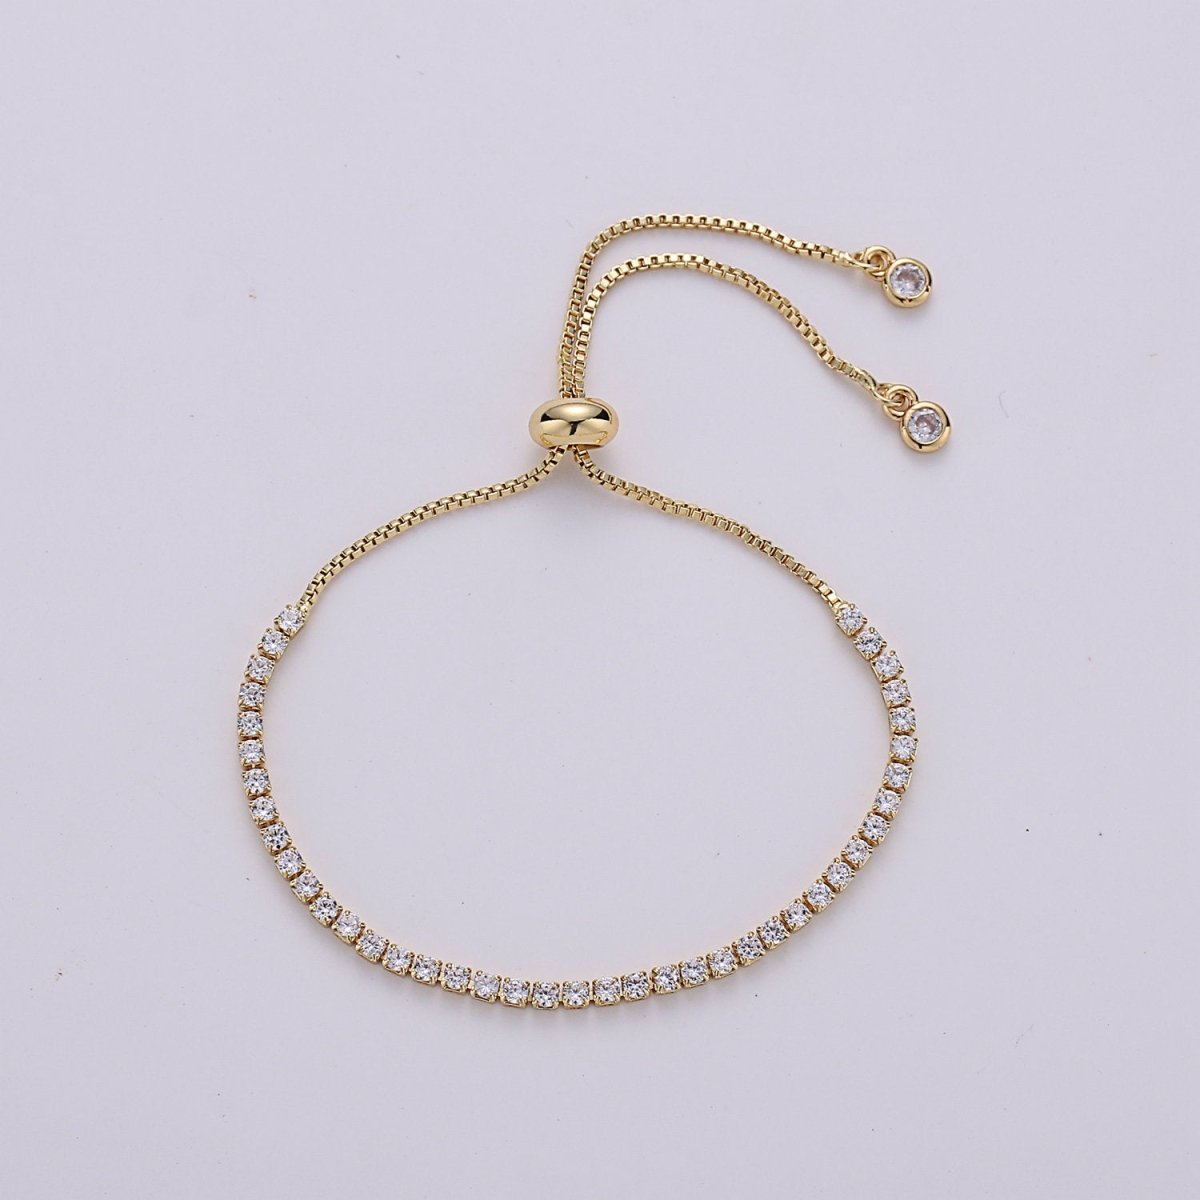 Micro Pave Adjustable Bracelet, Rainbow Clear CZ Cubic Bracelet Gold tennis bracelet in 14k Gold Filled Chain | K-546 K-547 - DLUXCA